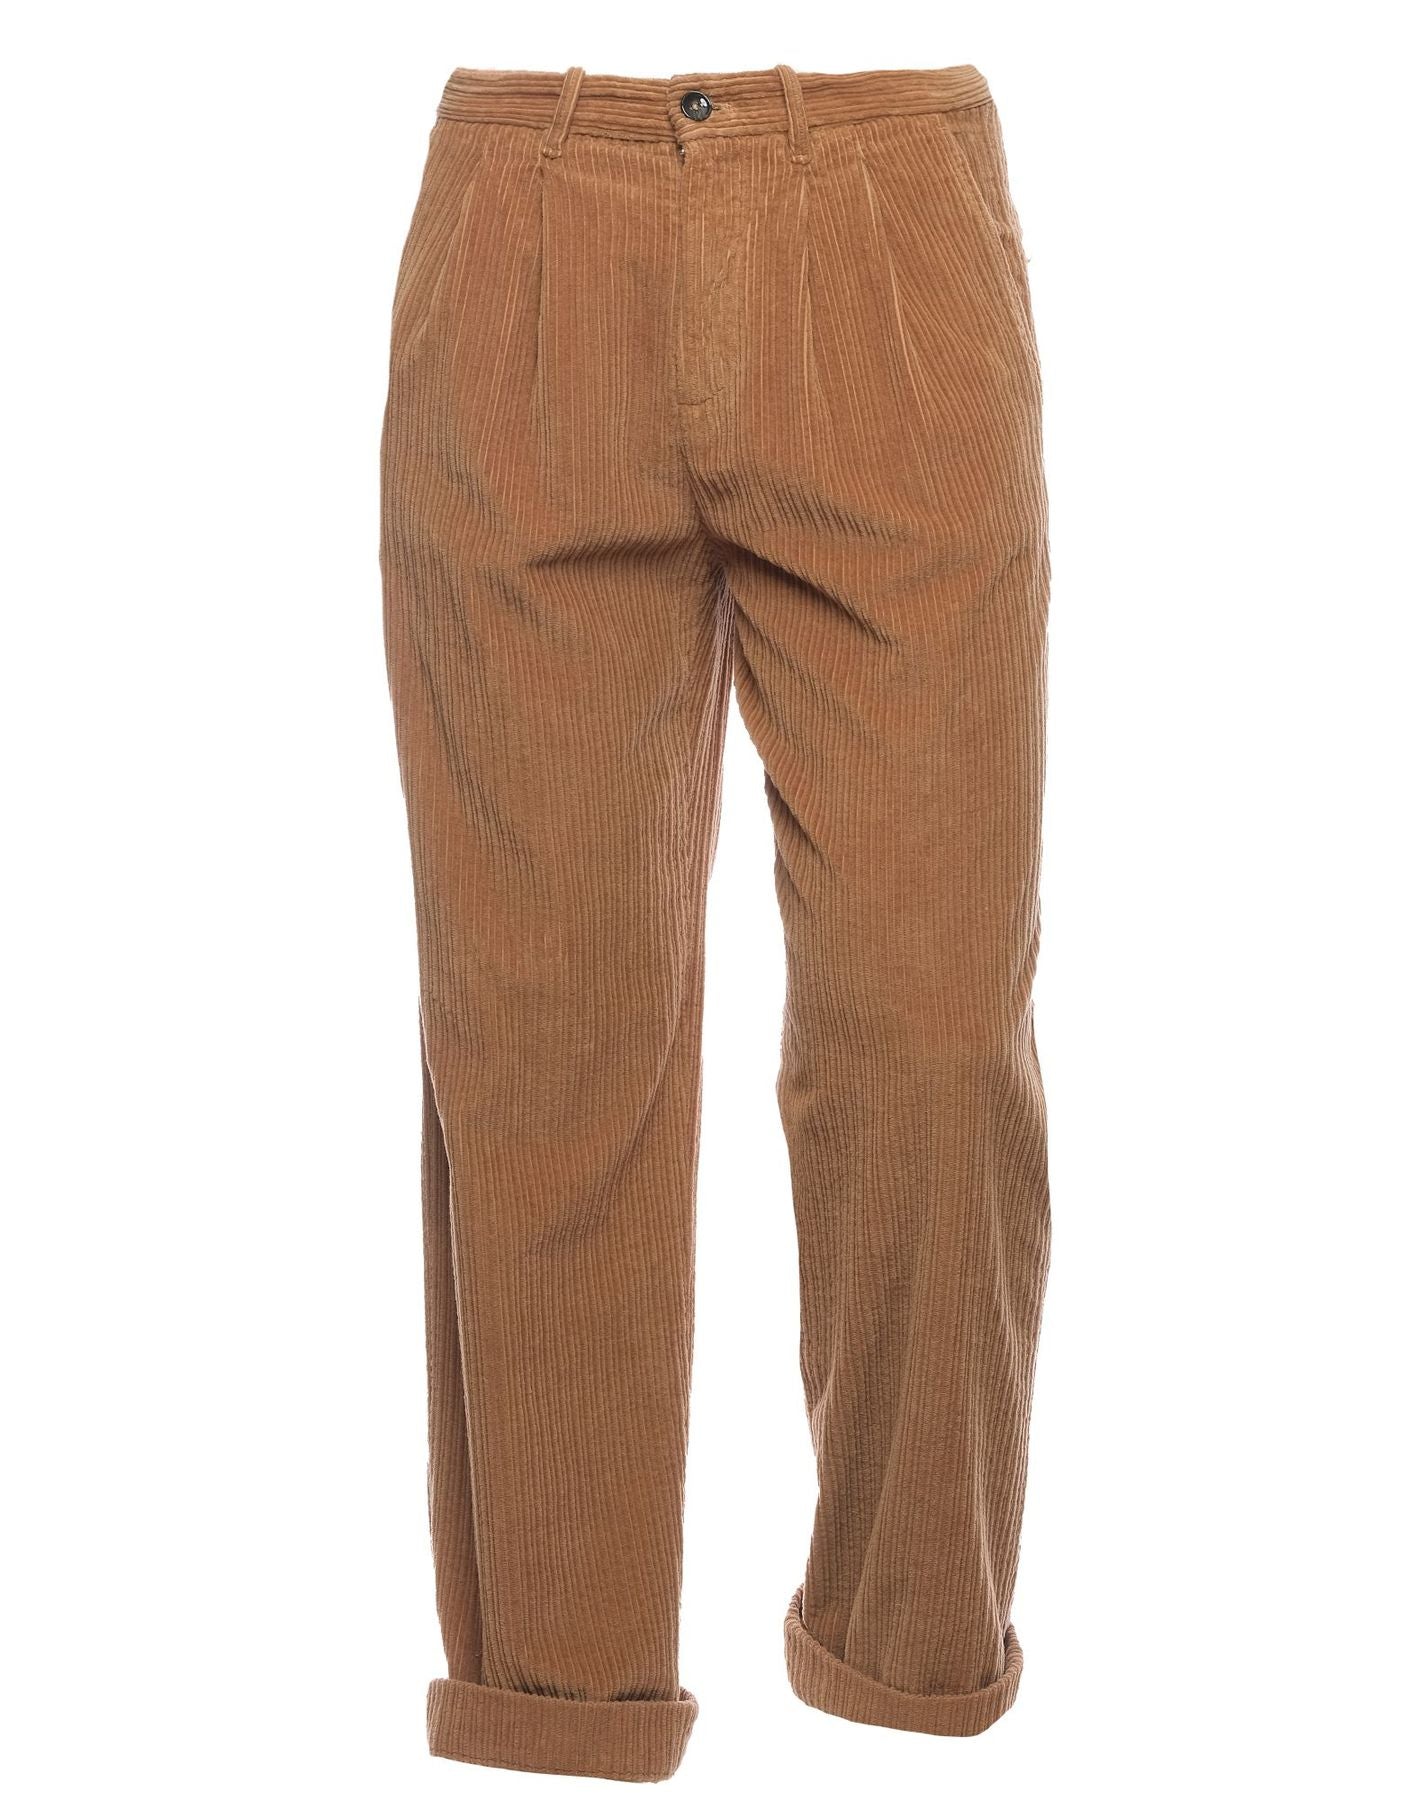 Pantaloni man marco camel NINE:INTHE:MORNING